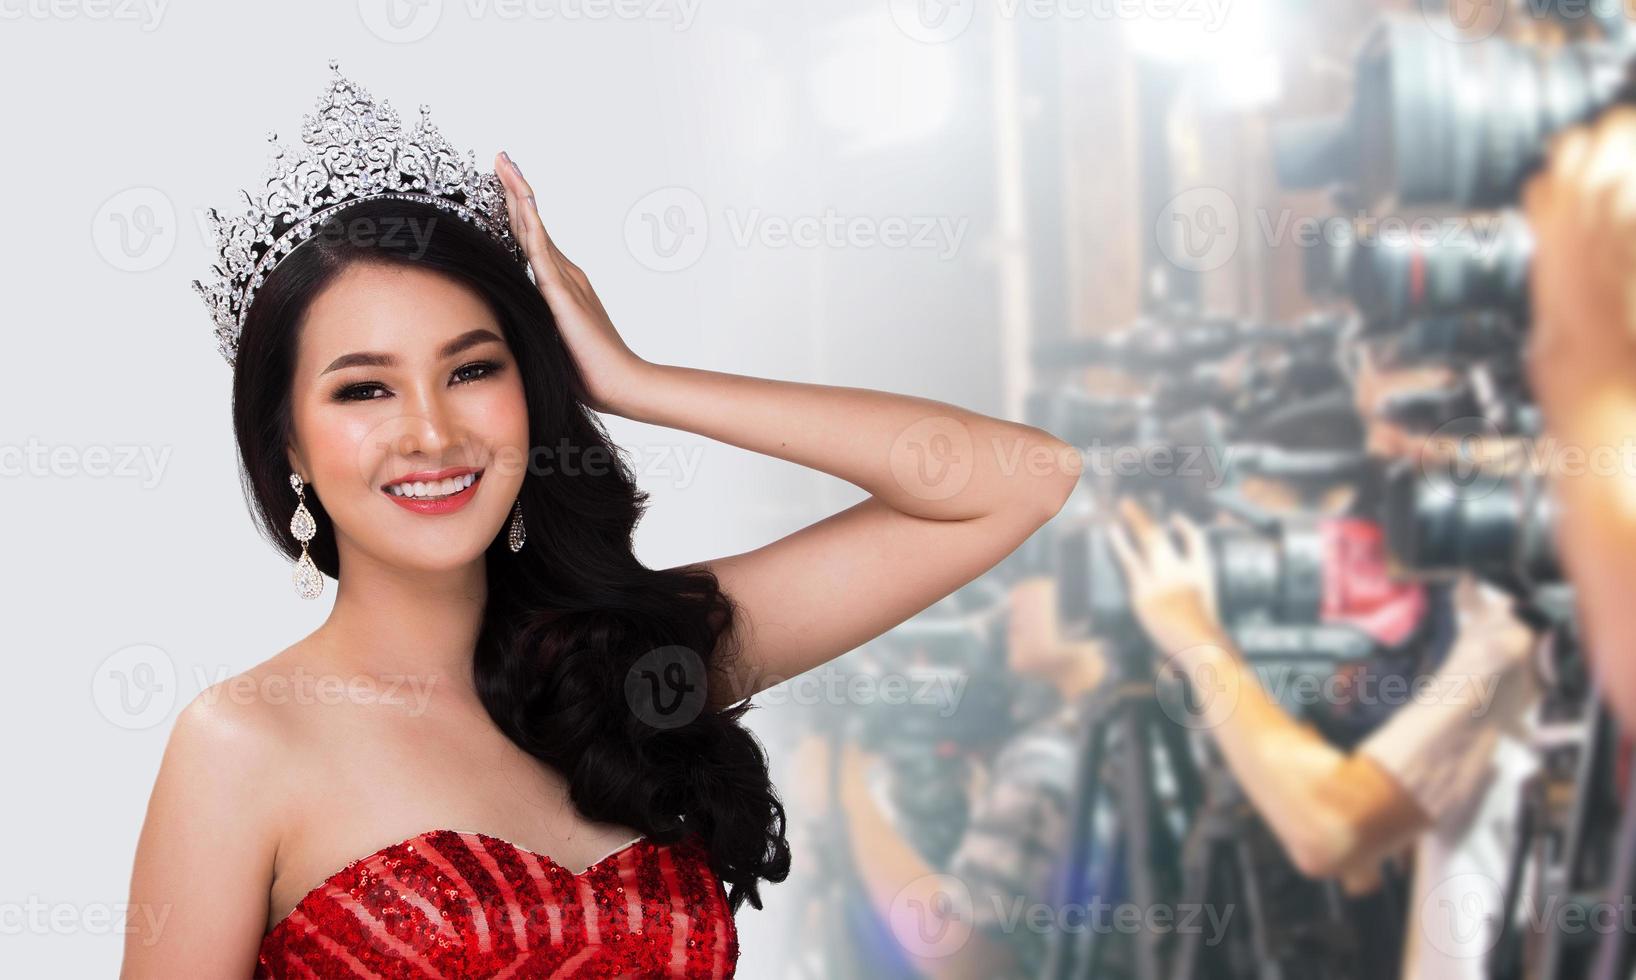 Silver Diamond Crown of Miss Pageant Beauty Universe World Contest Stand vor Gruppenmedien Pressereporter Kamera vdo Fotoshooting, Kopierraum foto